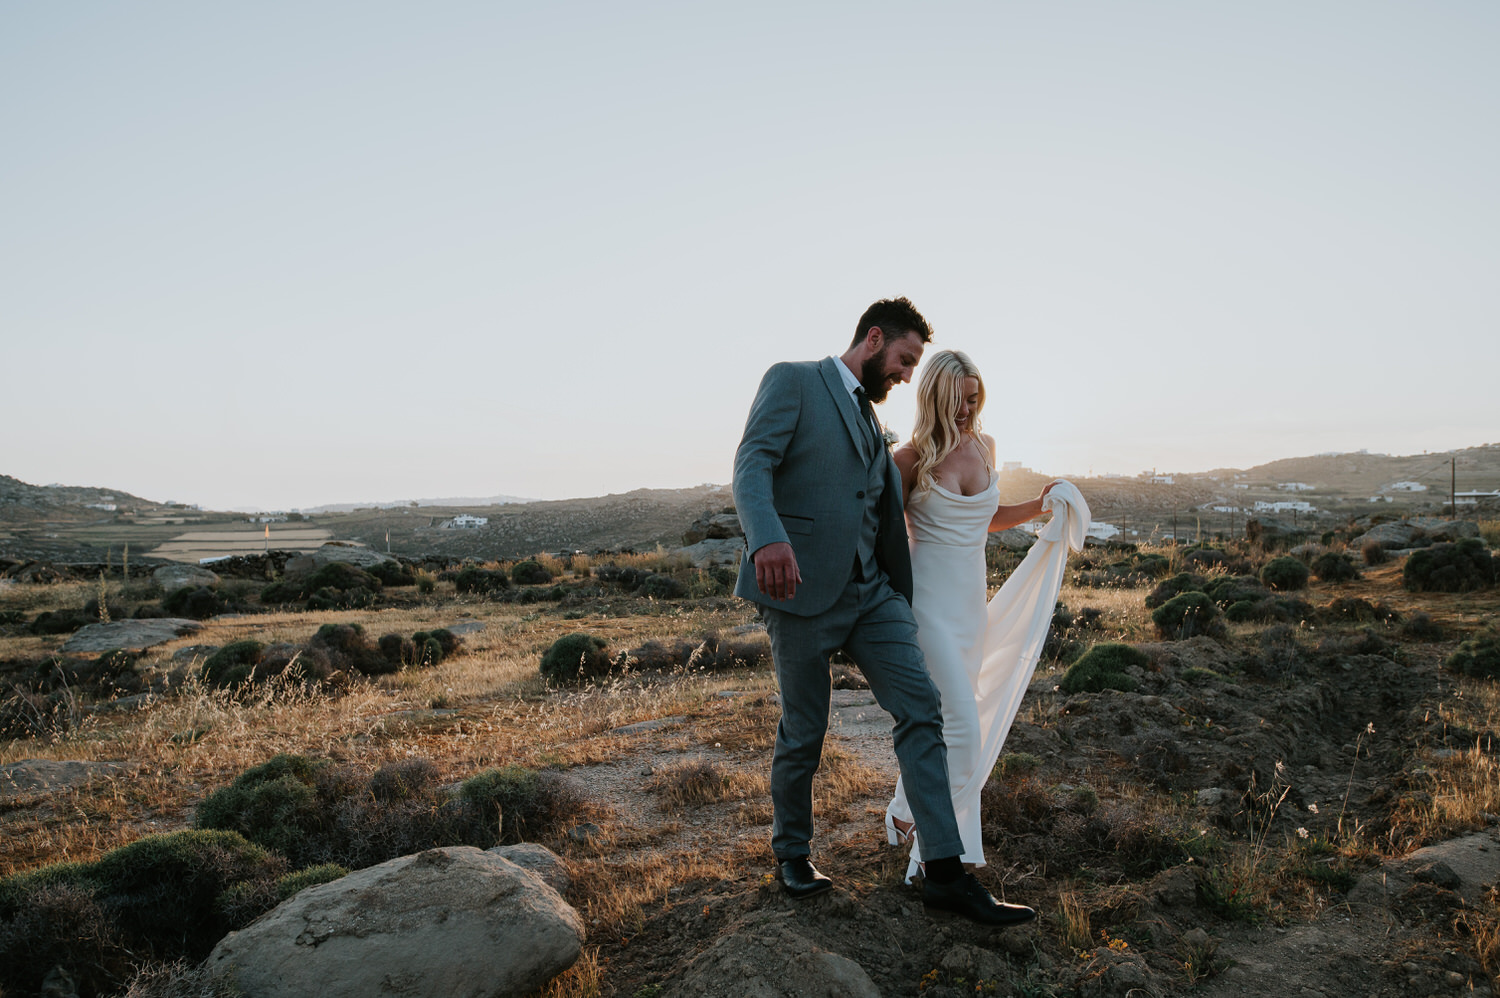 Mykonos wedding photographer: bride and groom having fun walking in sunset light through grassy field.